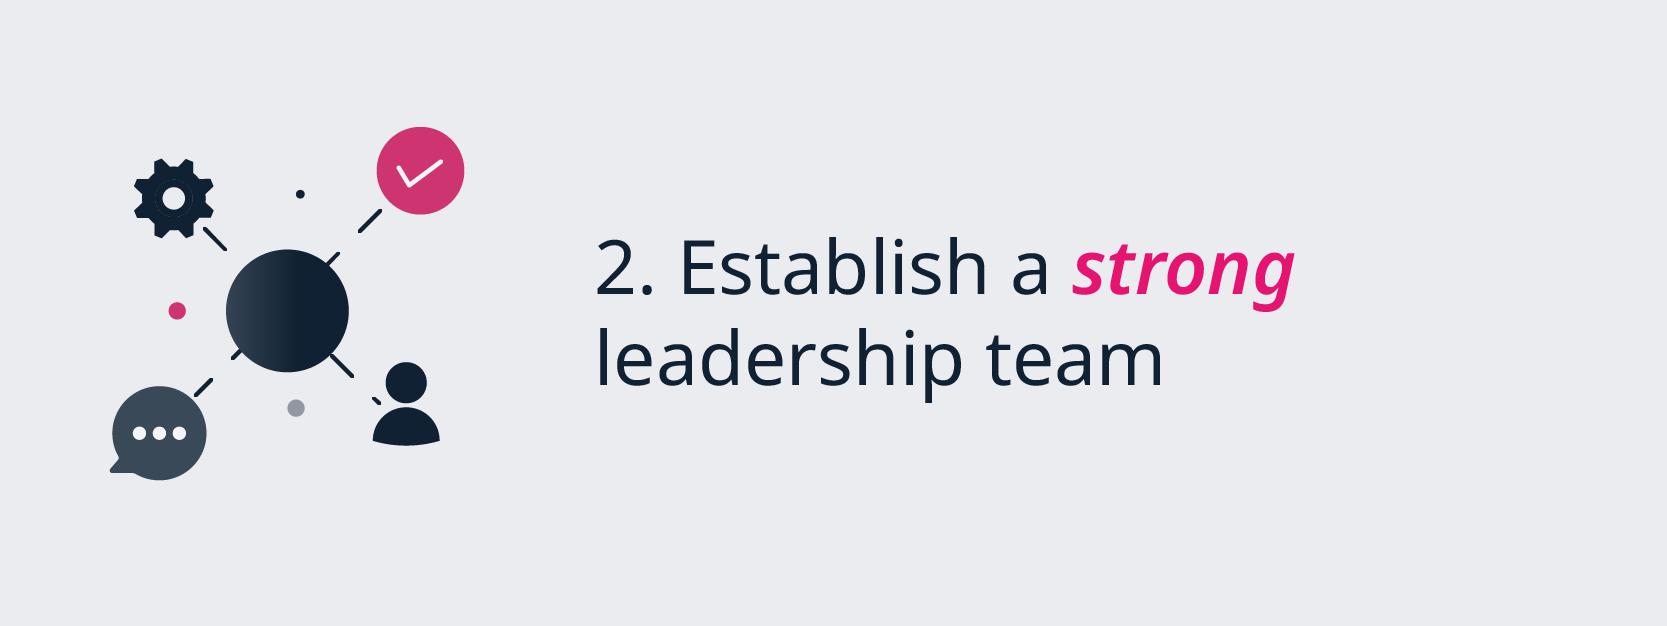 Step 2 towards successful digital transformation: Establish a strong leadership team.